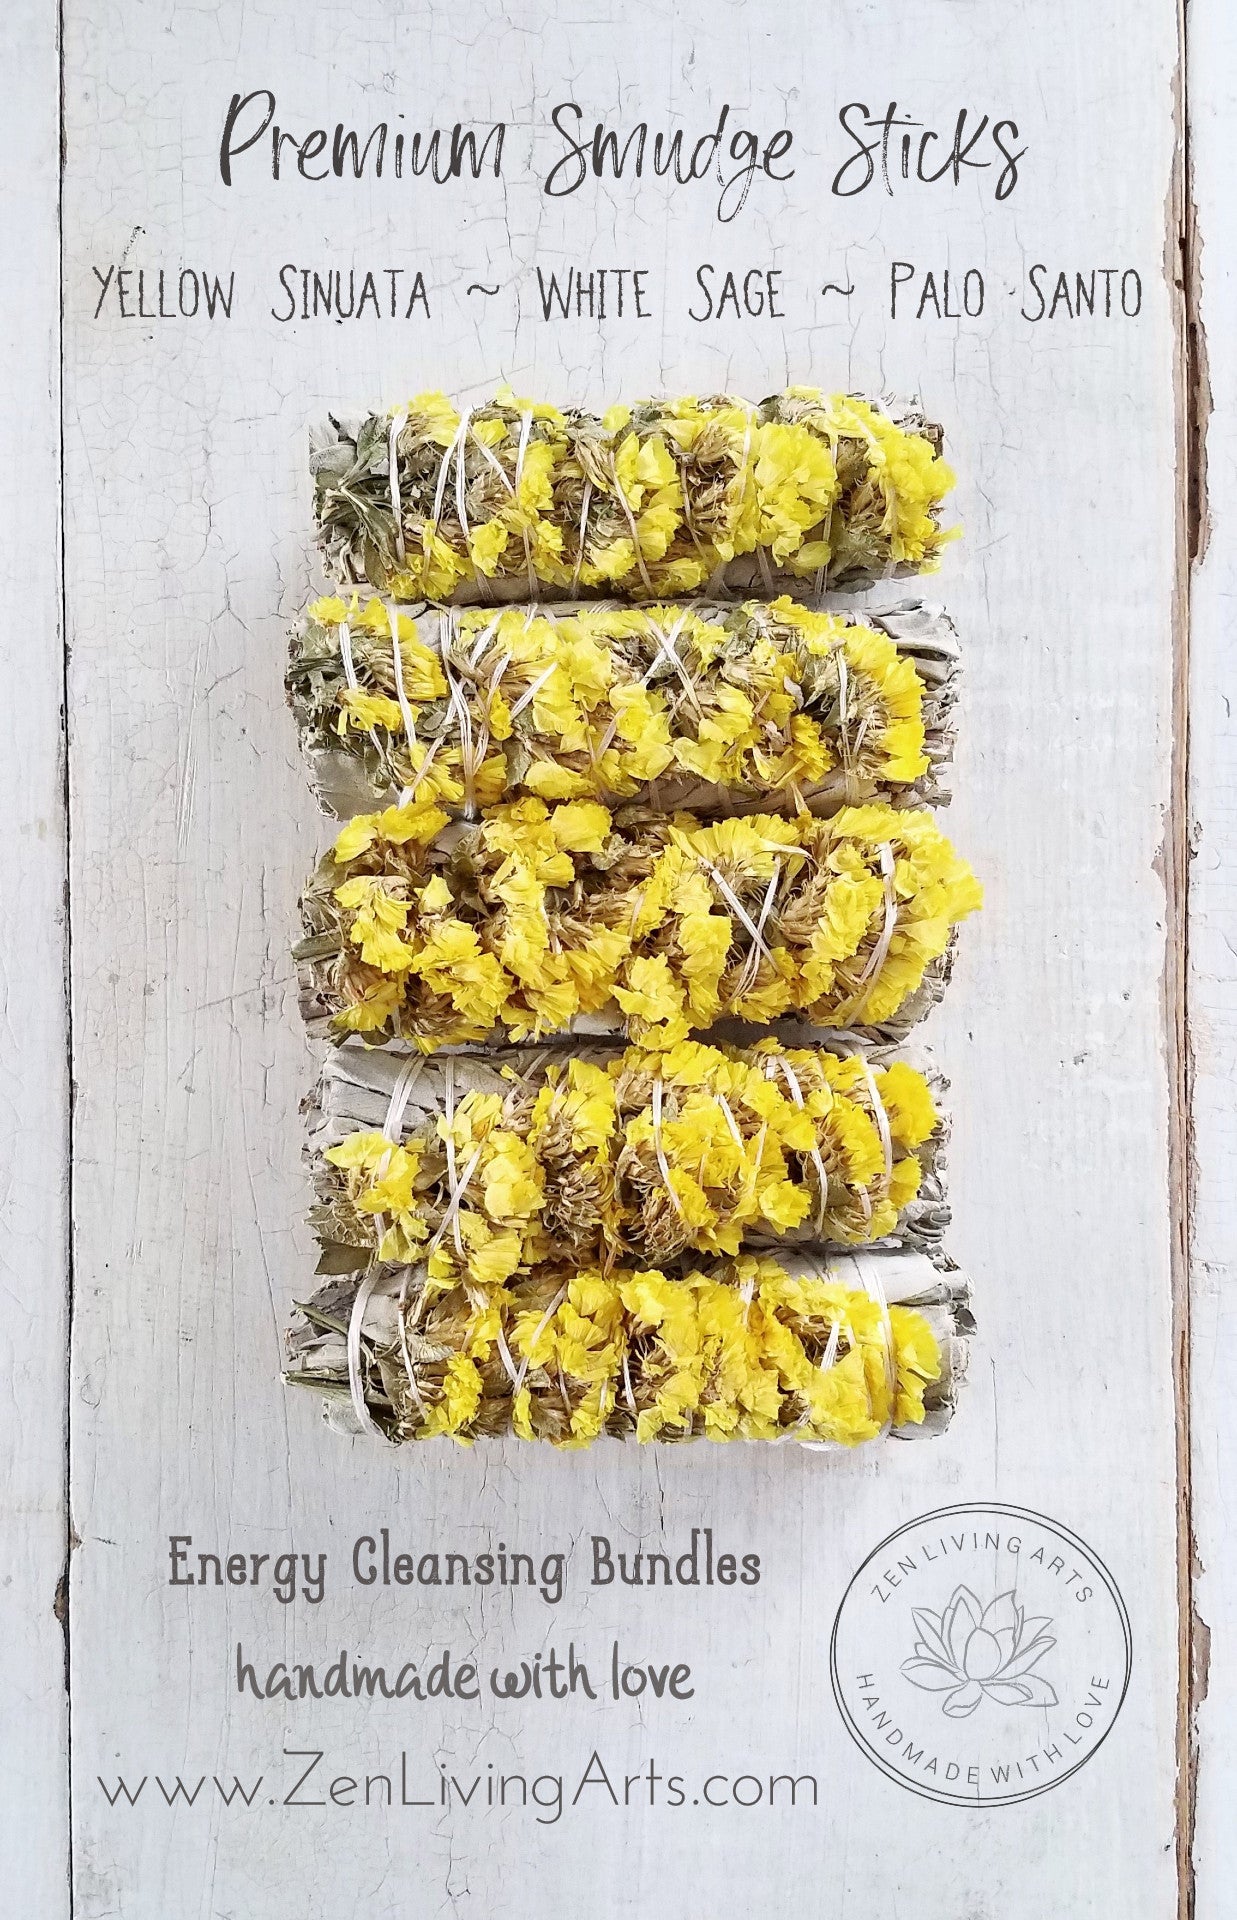 Yellow Sinuata, White Sage, & Palo Santo. Premium Smudging Sticks. Energy Cleansing Bundle.